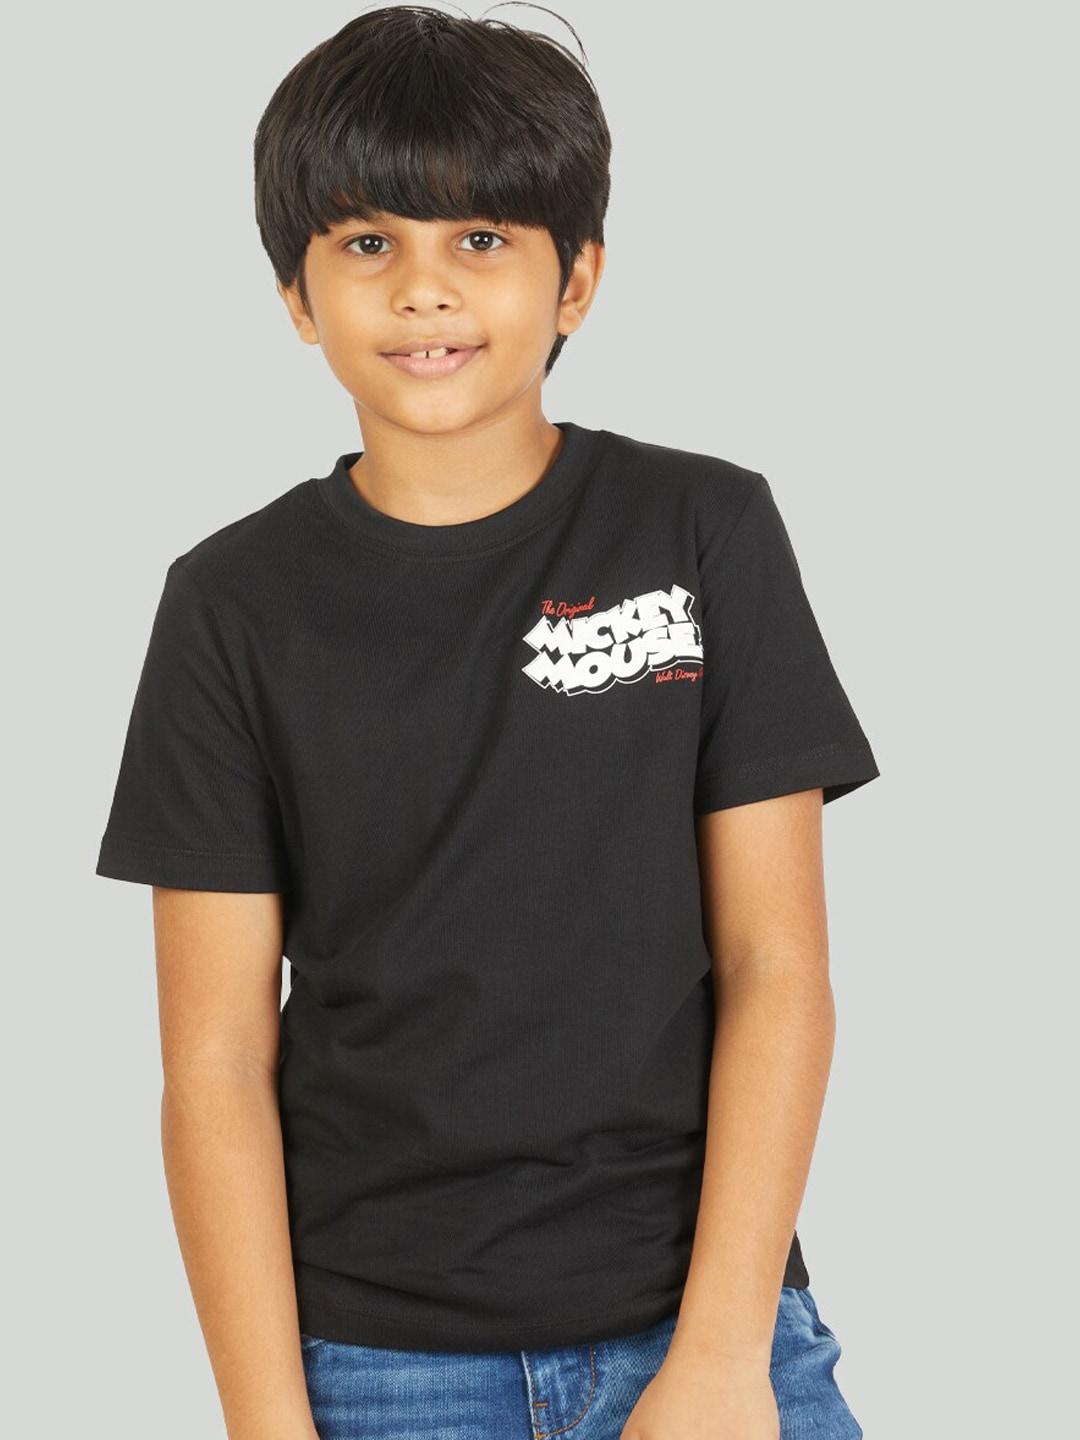 Zalio Boys Black Mickey Mouse Printed T-shirt